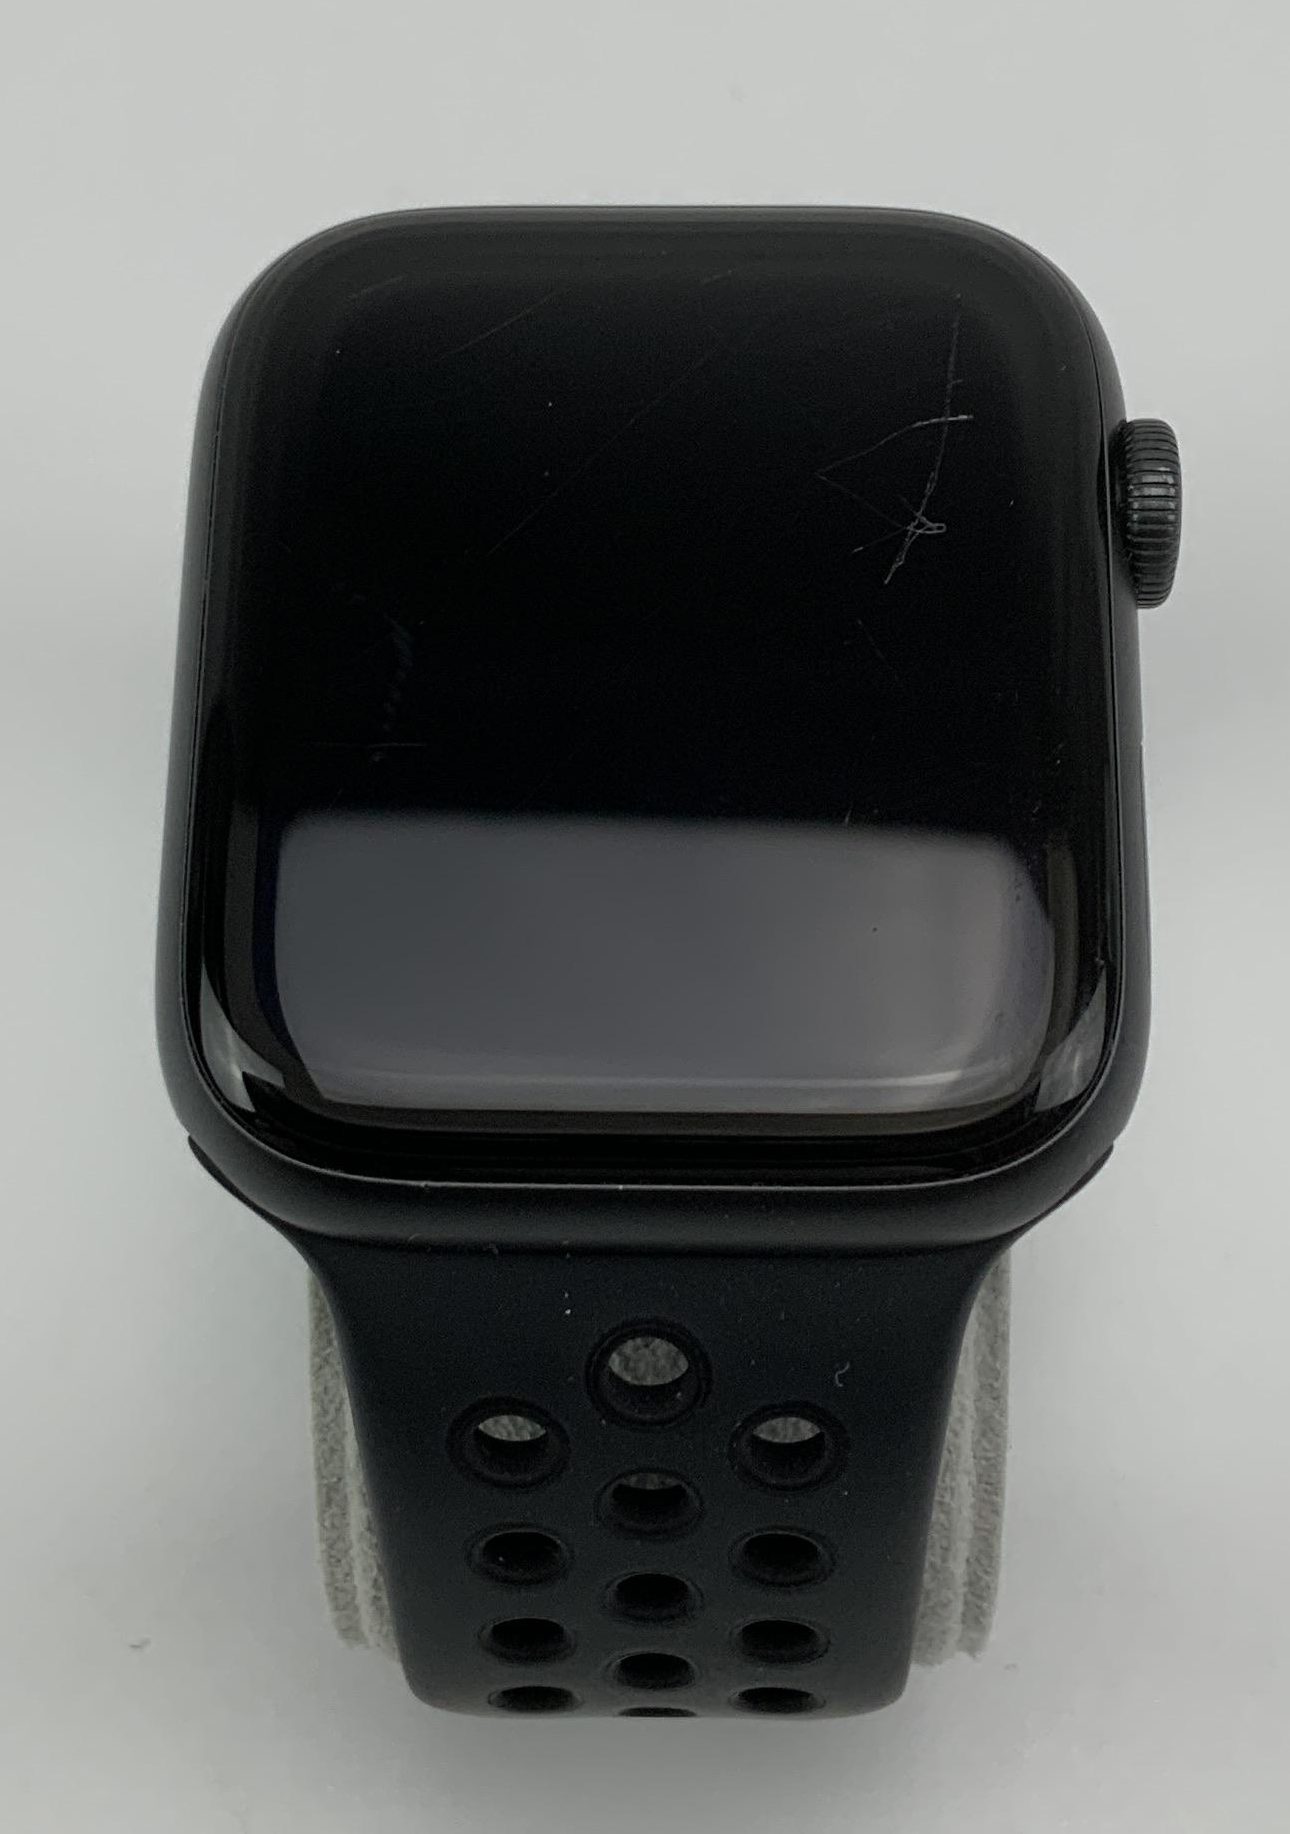 Watch Series 6 Aluminum Cellular (44mm), Space Gray, Kuva 1